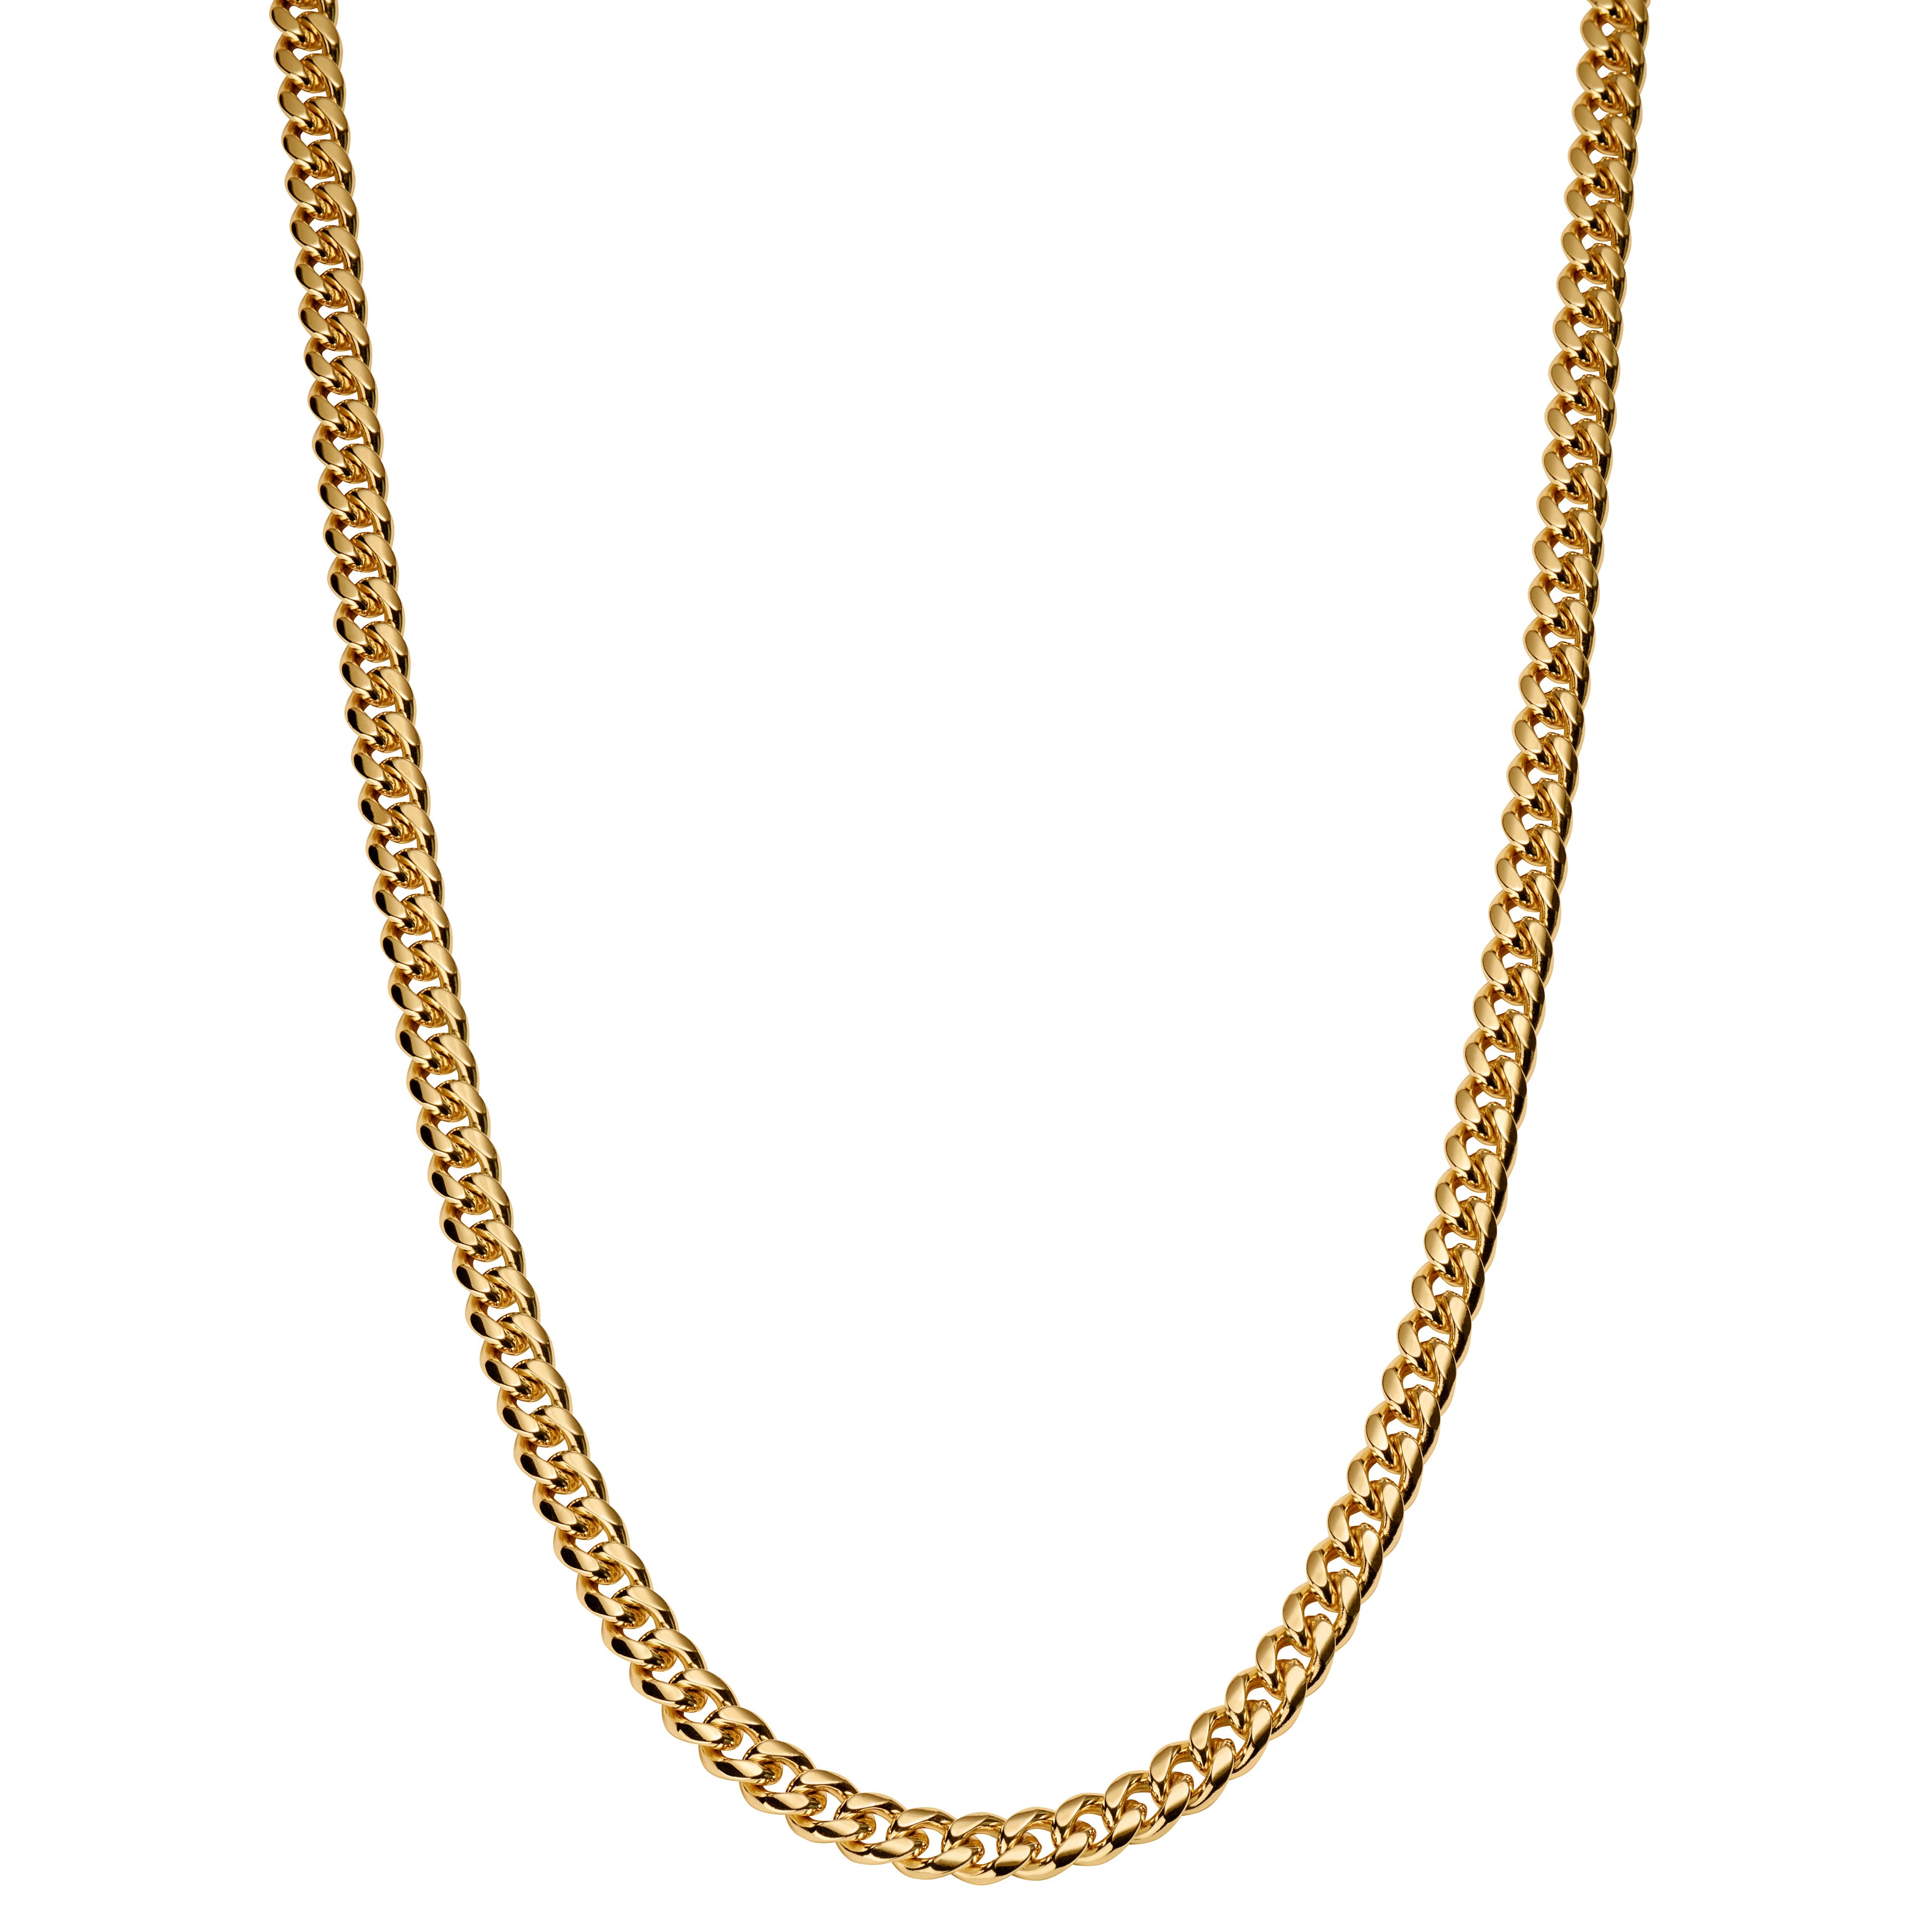 Goldfarbene Ketten Halskette 6mm 